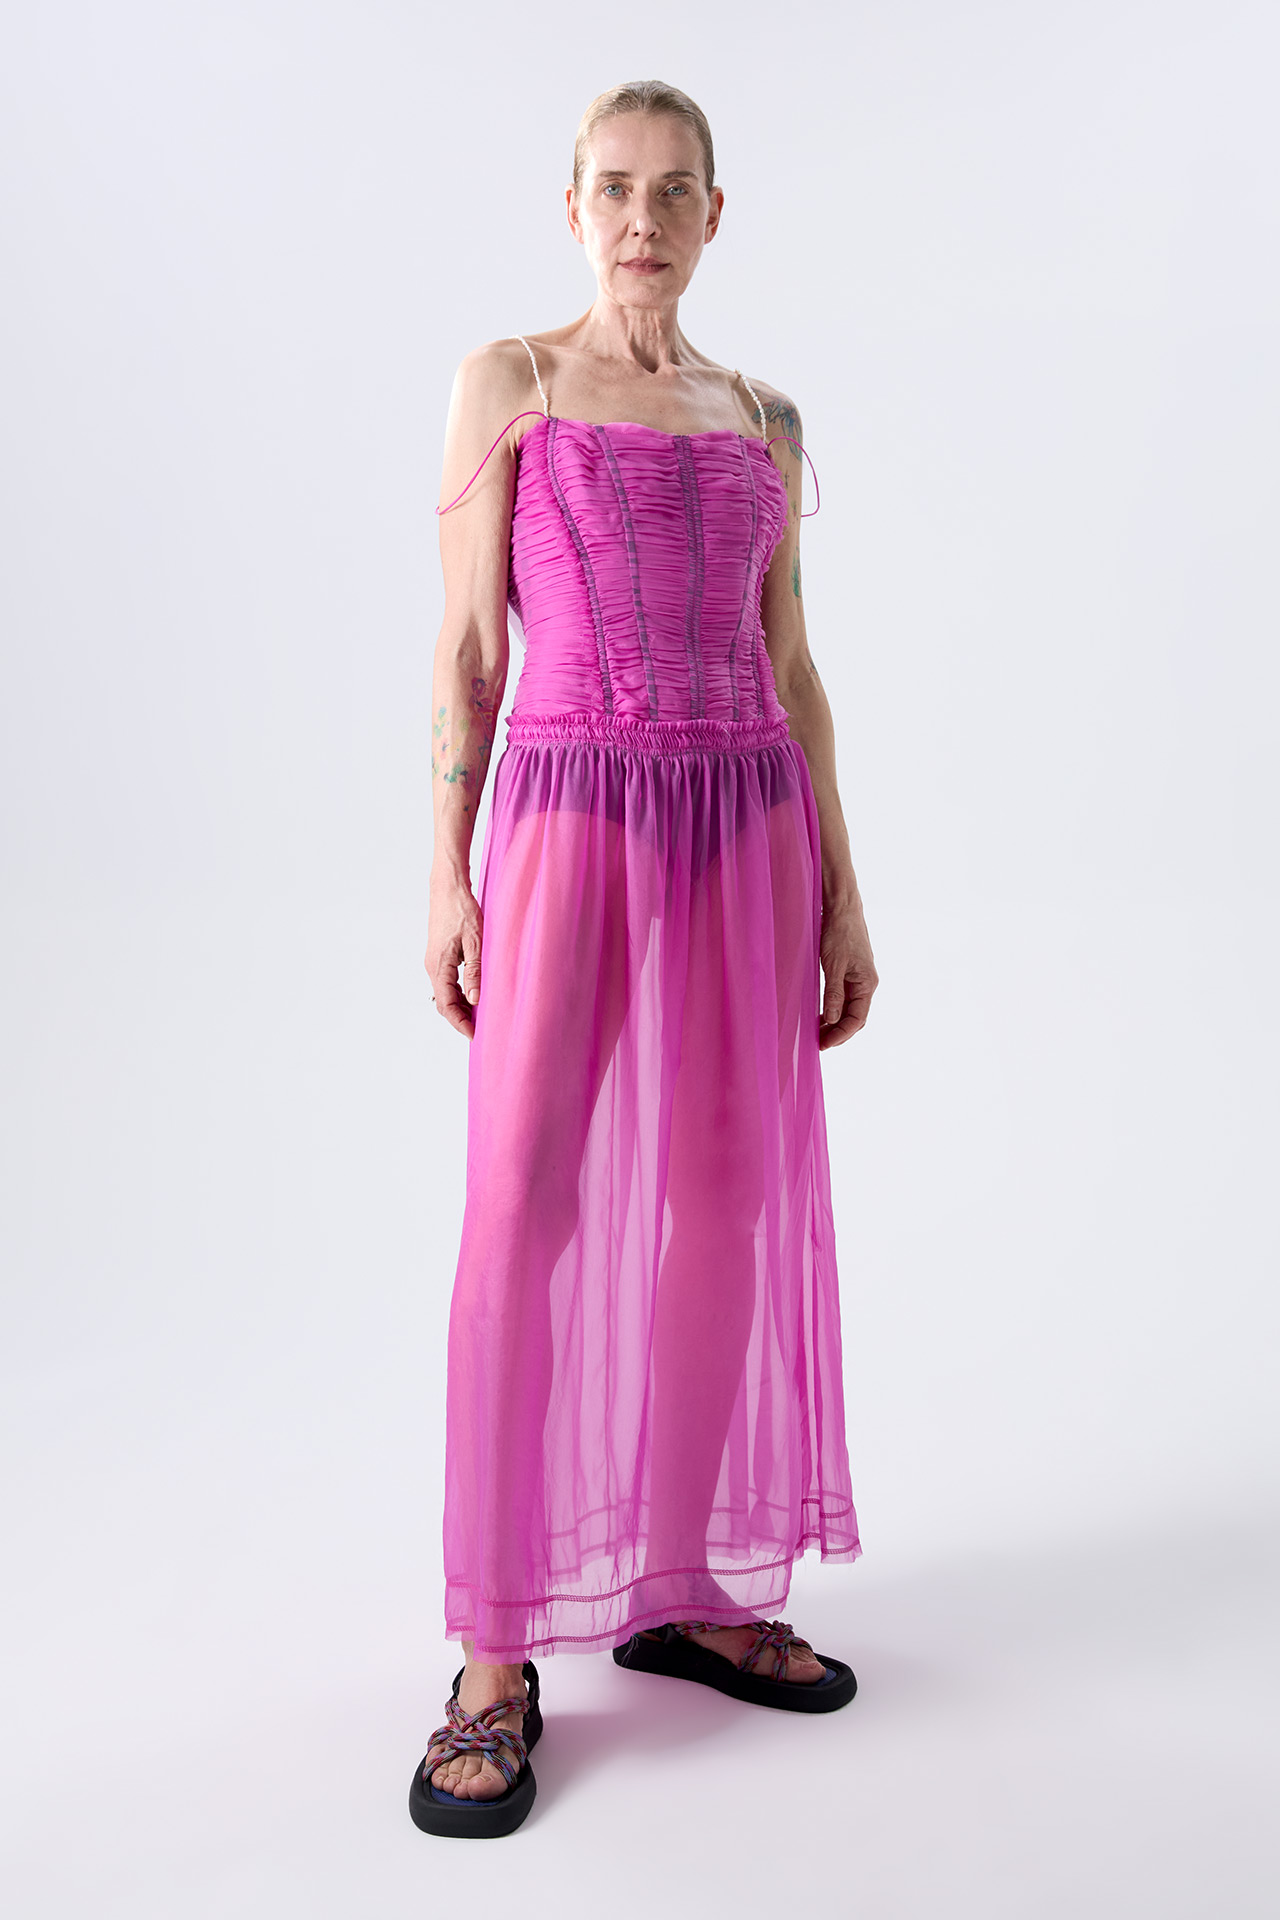 Franca Pink Dress | Spain | in Miista Europe Made